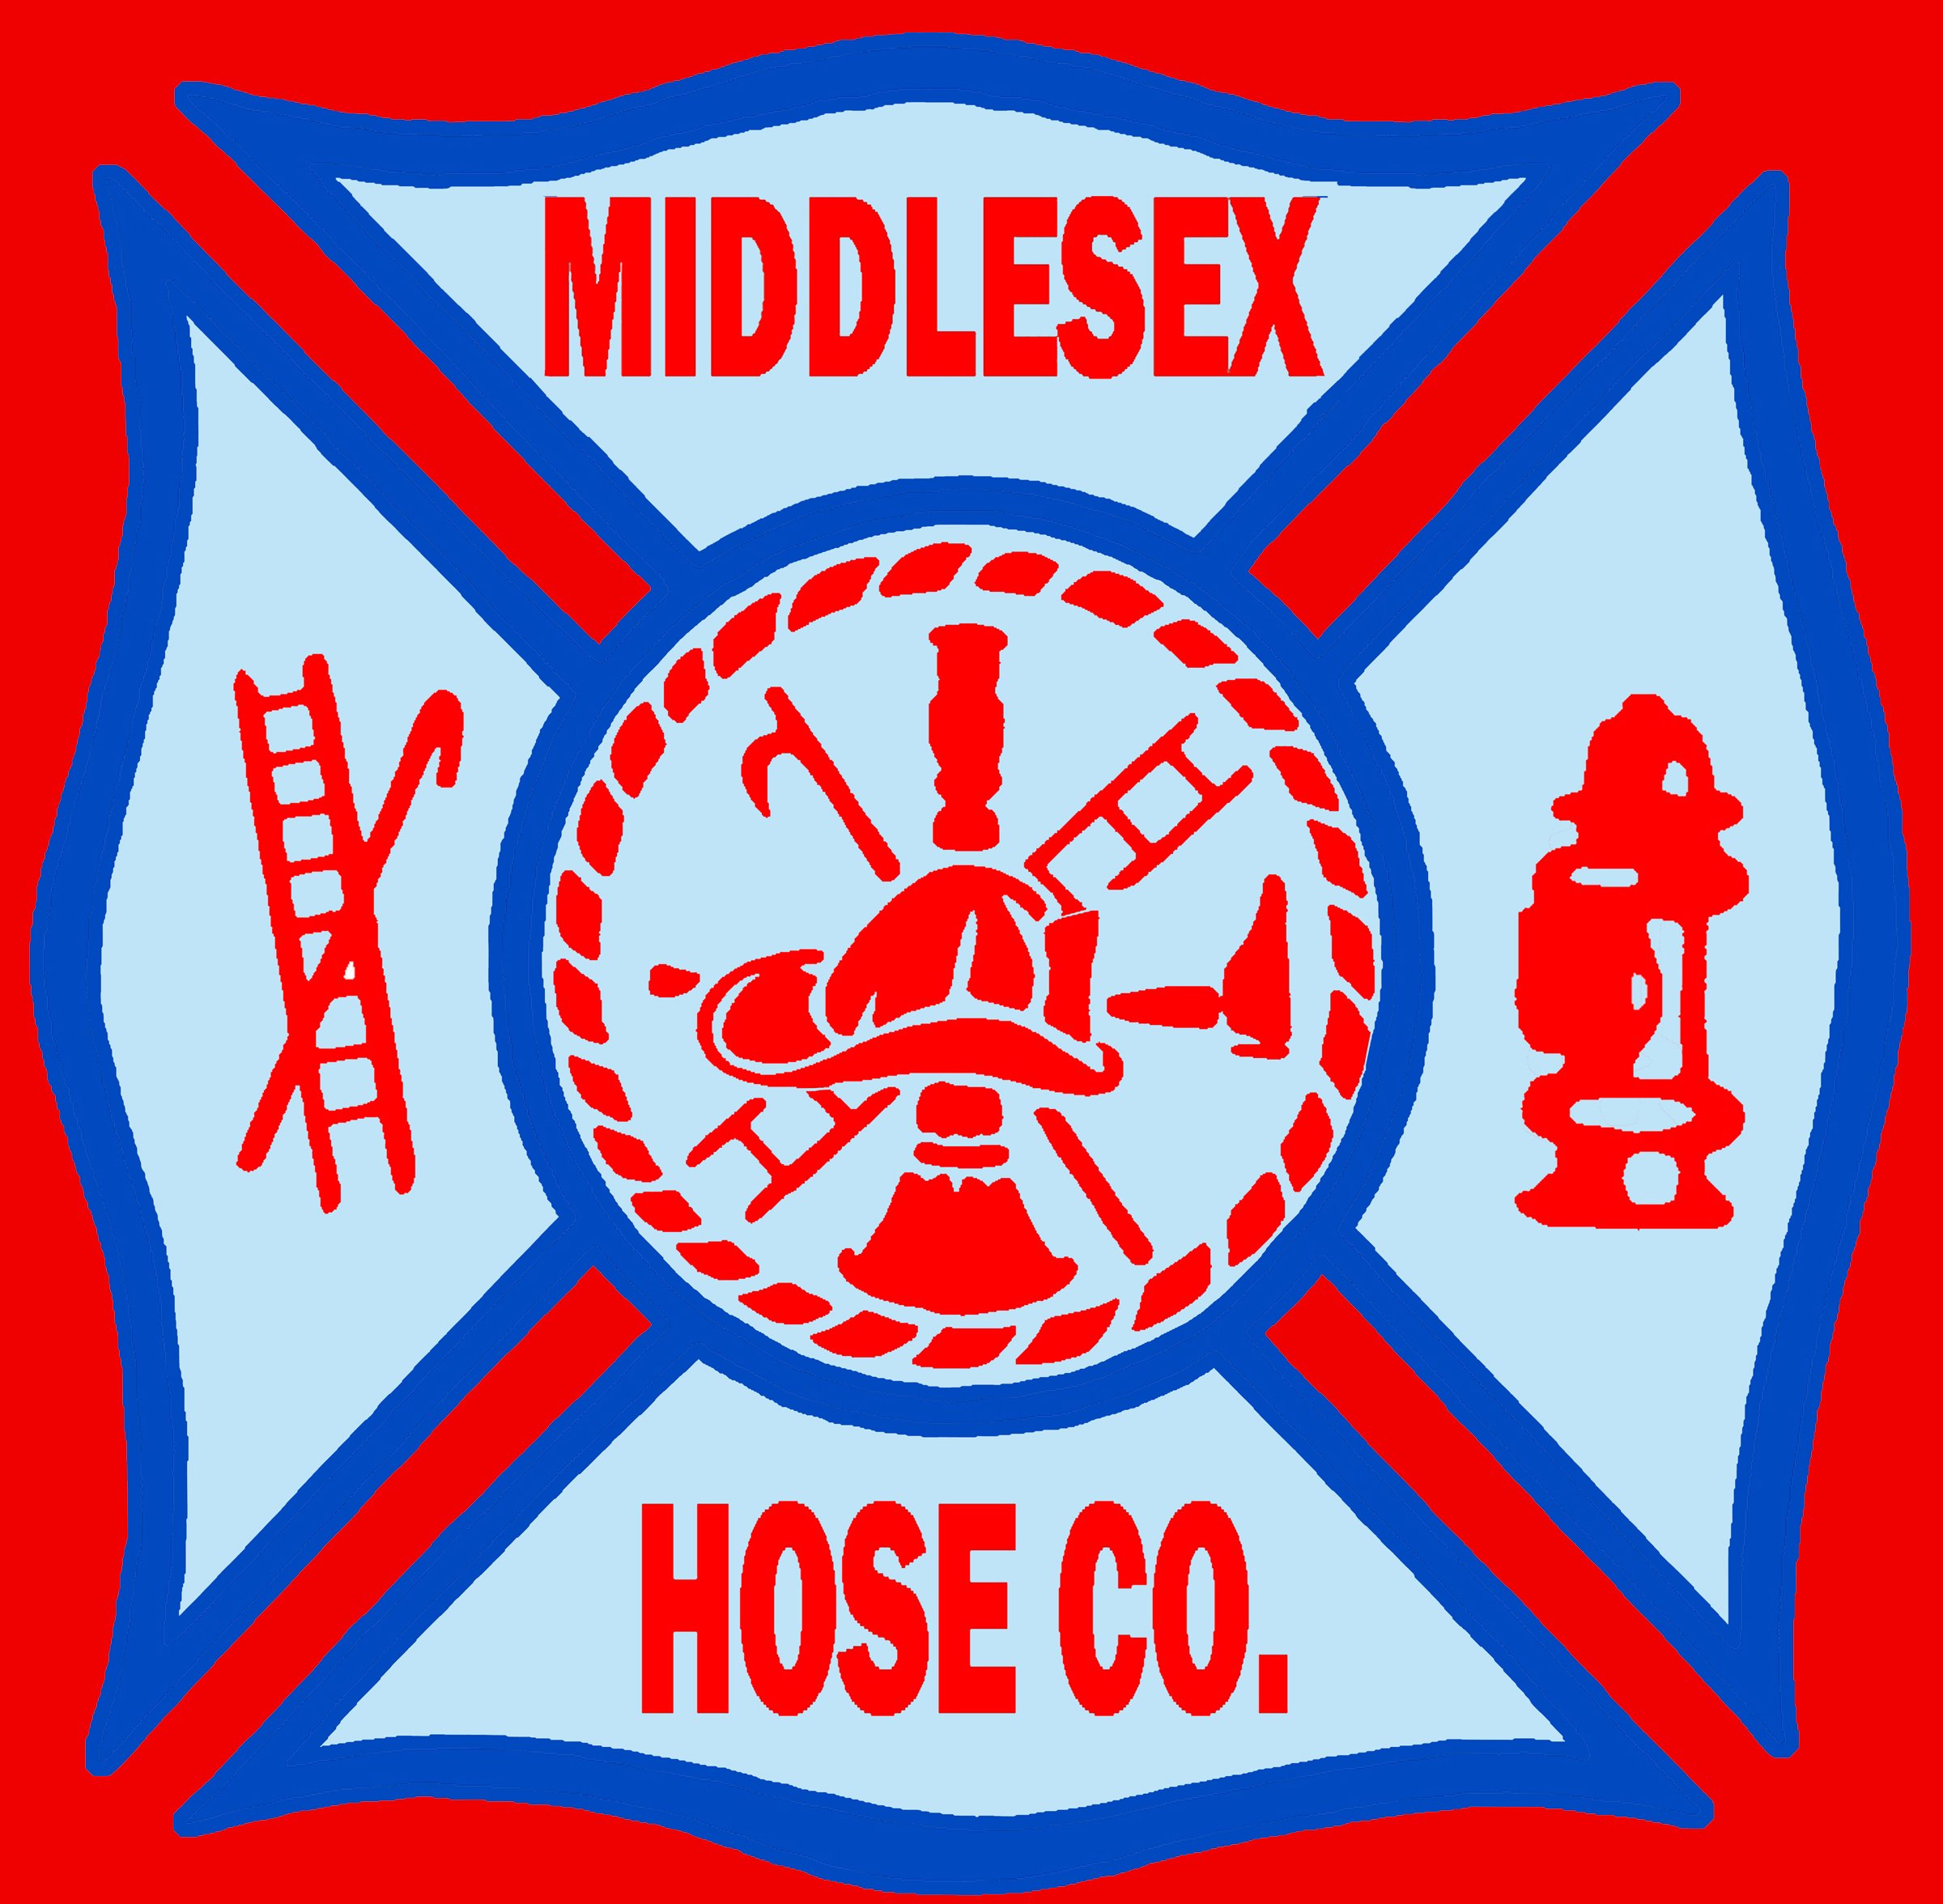 Middlesex Hose